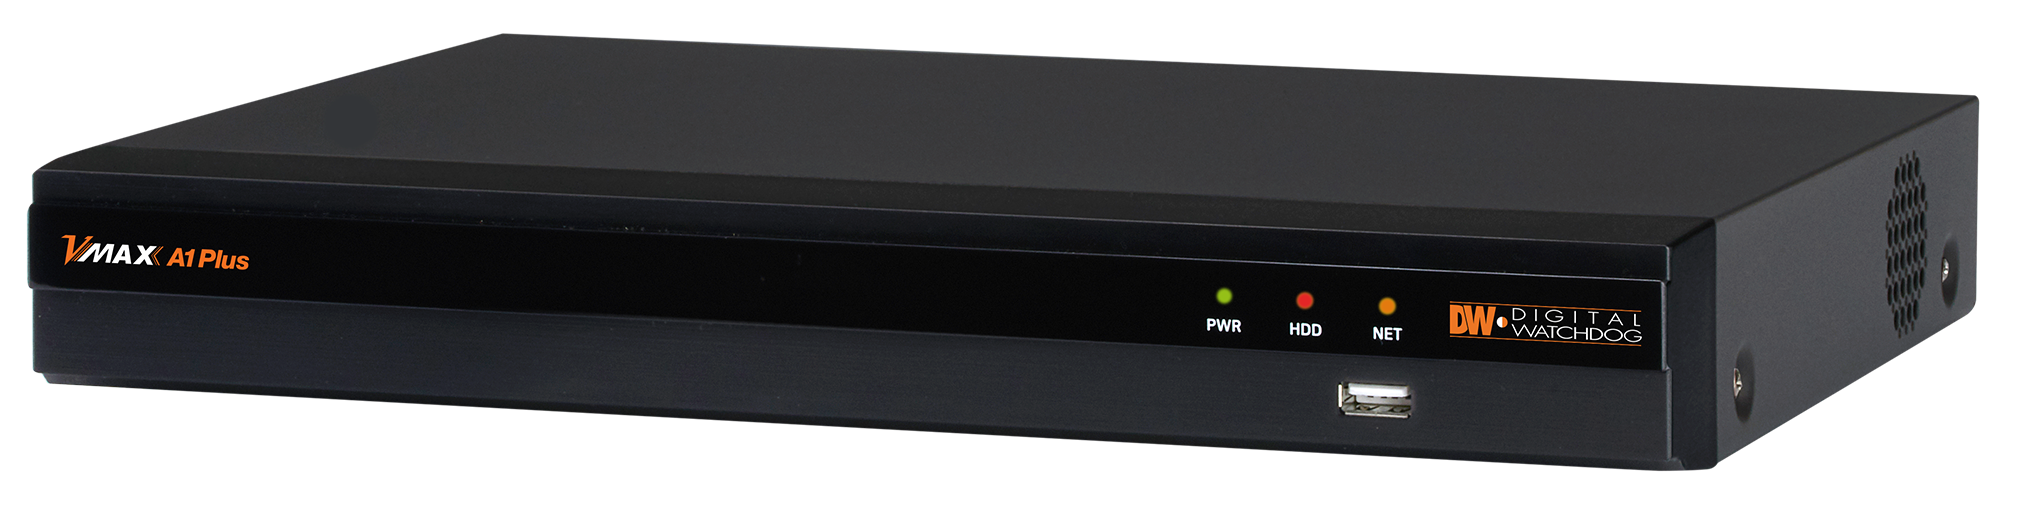 Digital Watchdog DW-VA1P44T  UHDoC - DVR 4ch 4 Channel Universal HD Over Coax DVR